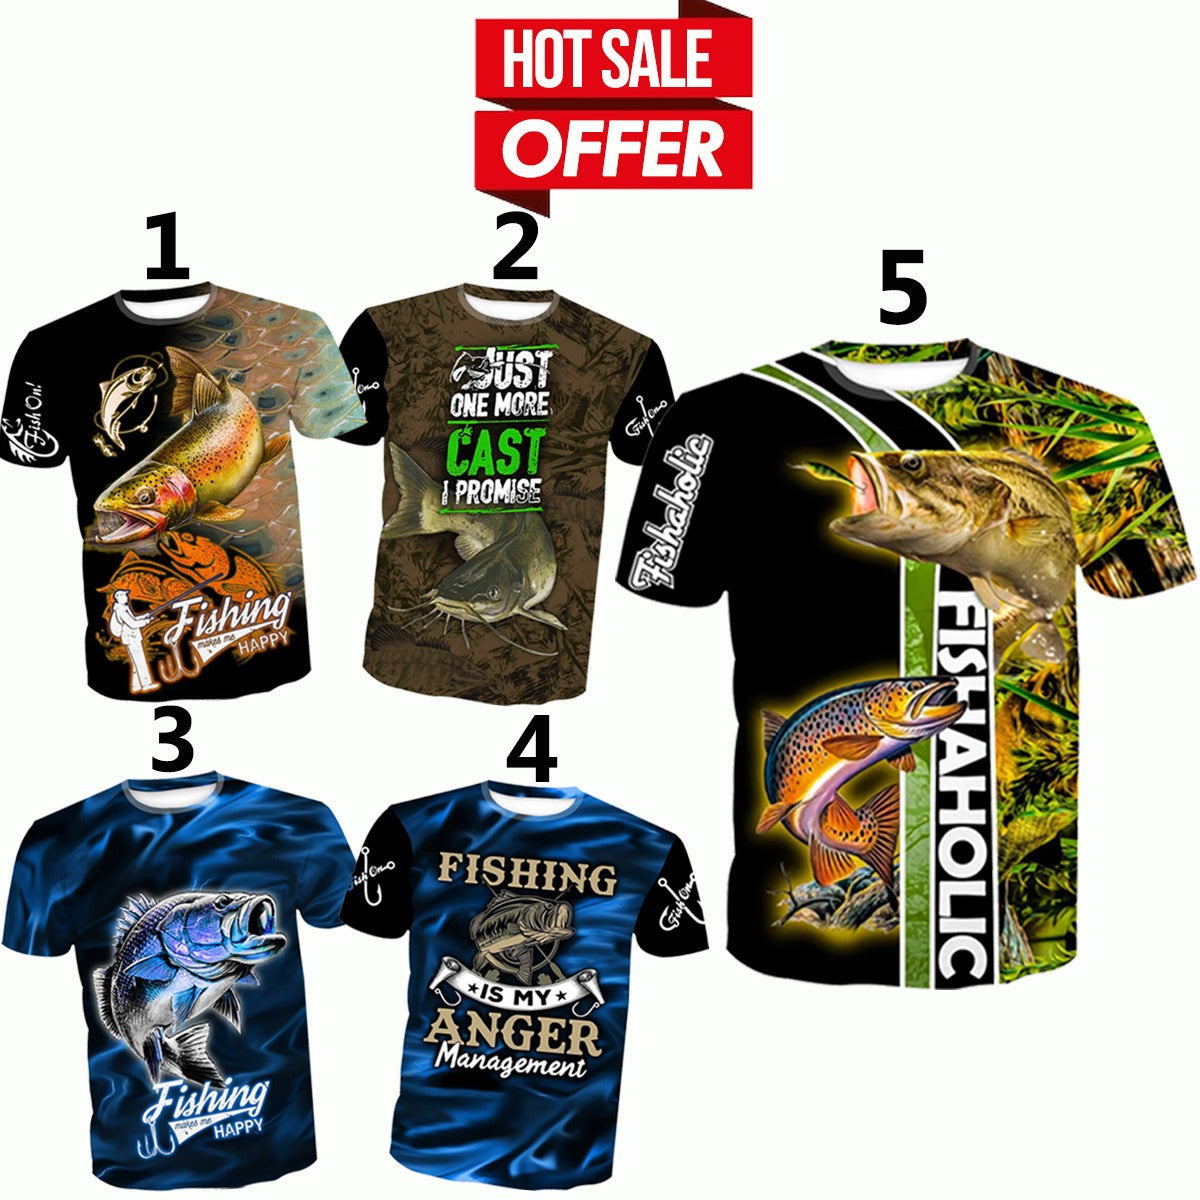 5 Fishing T- Shirts Hot Sale Offer - Fishing Nice